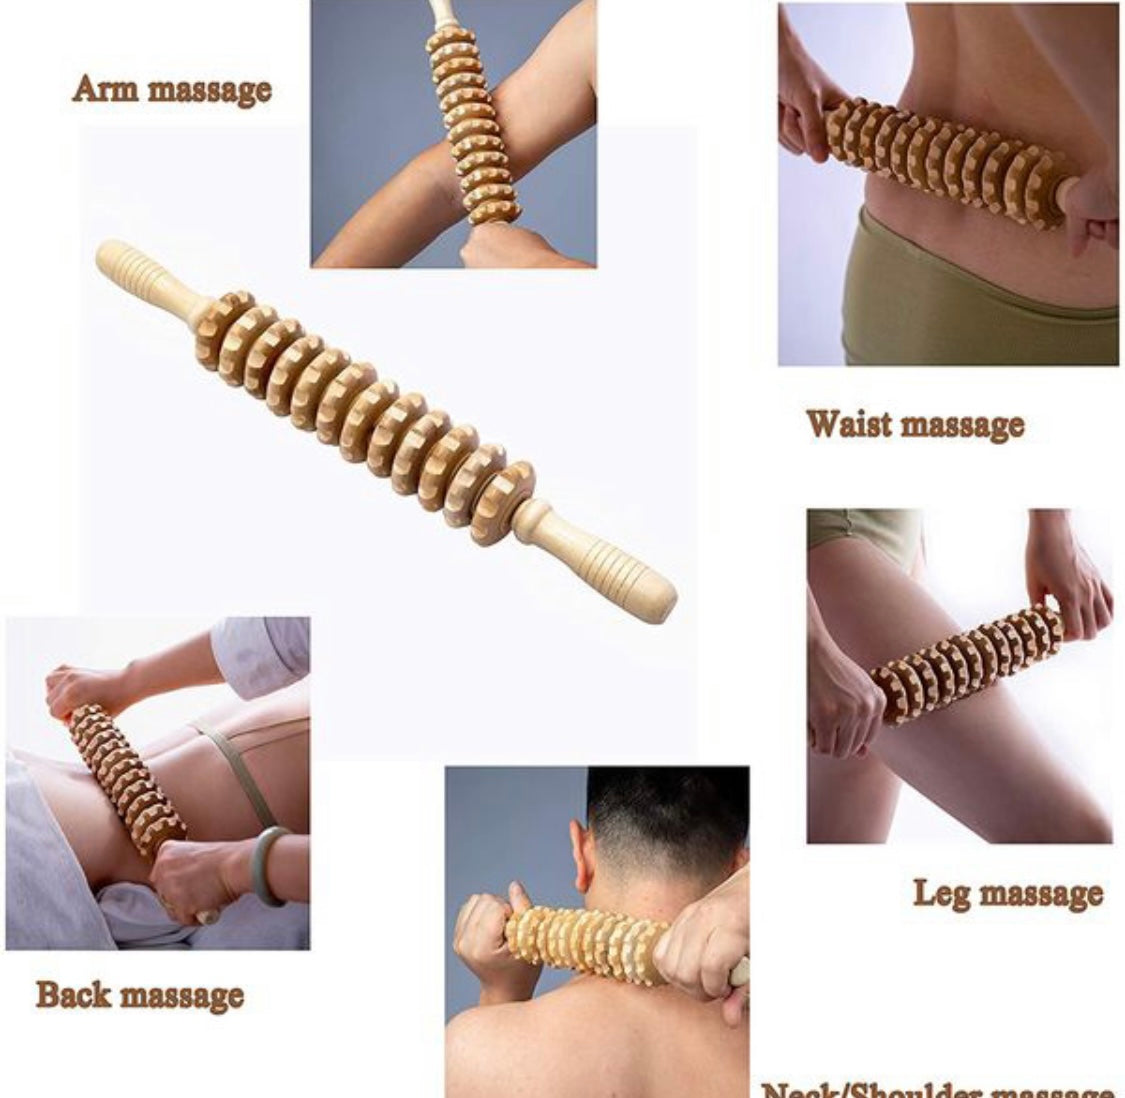 Anti-Cellulite Massage Oil – MarieLuxBeauty